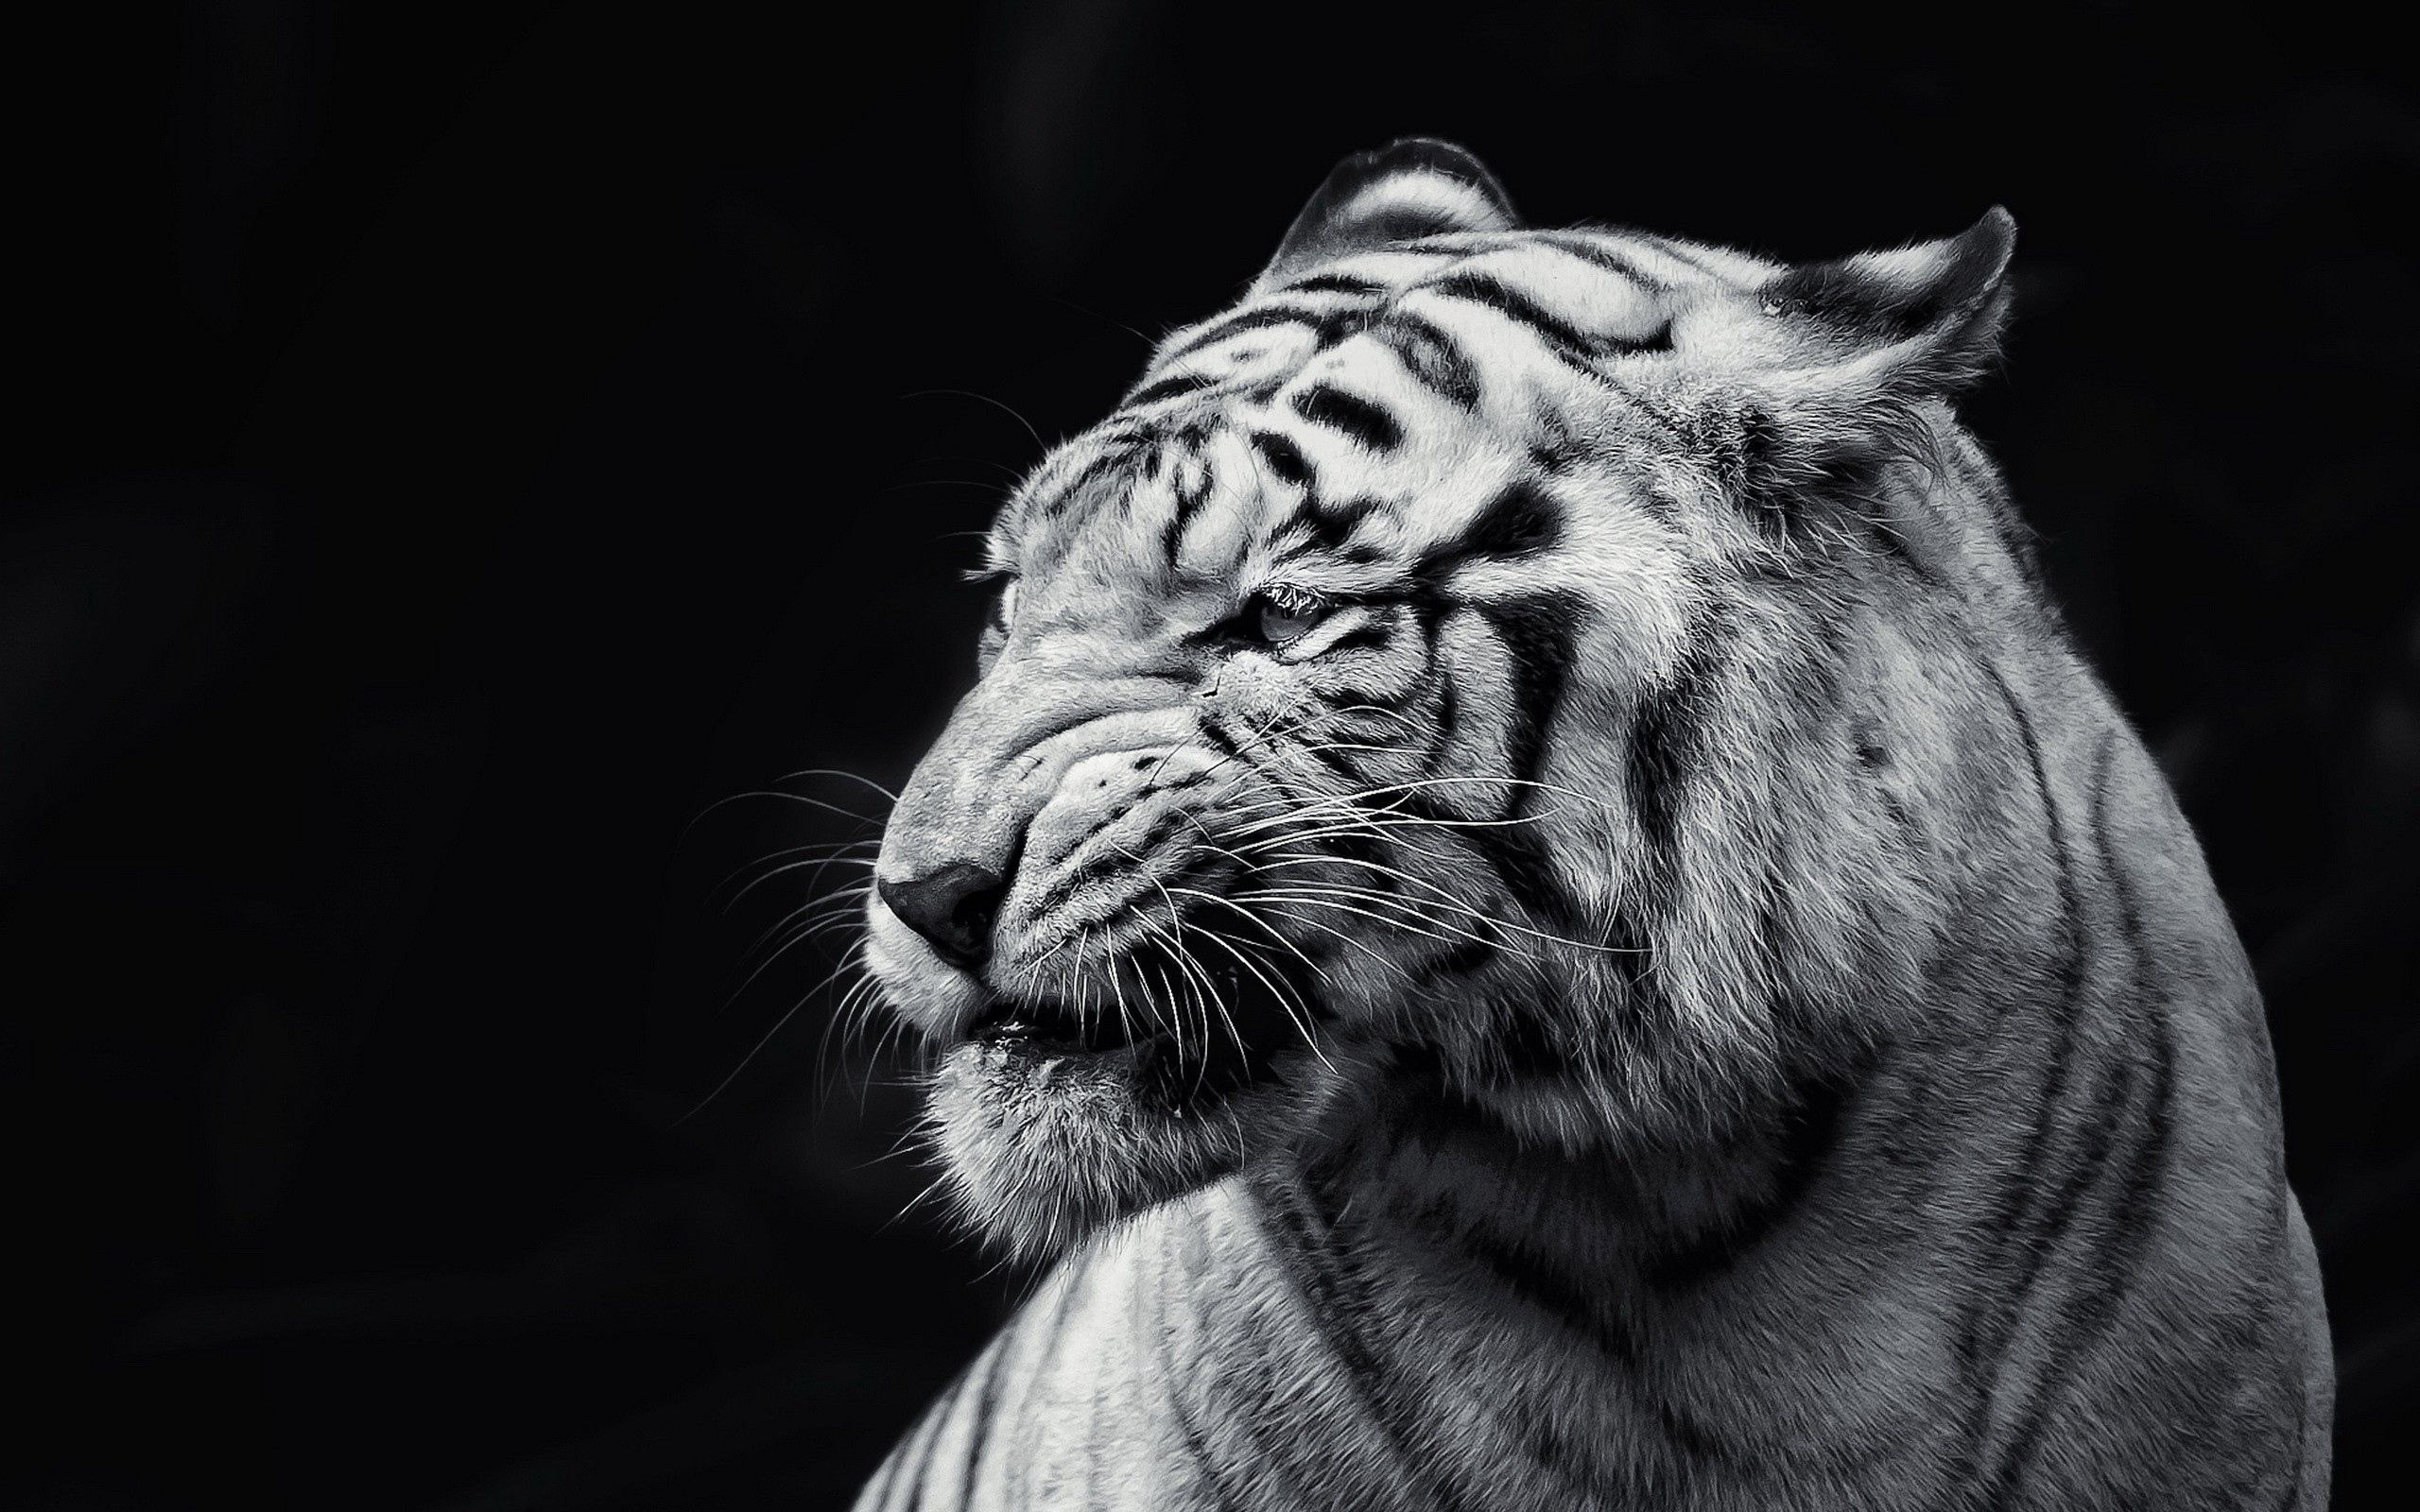 148906 descargar imagen tigre, chb, animales, bozal, visión, opinión, bw: fondos de pantalla y protectores de pantalla gratis